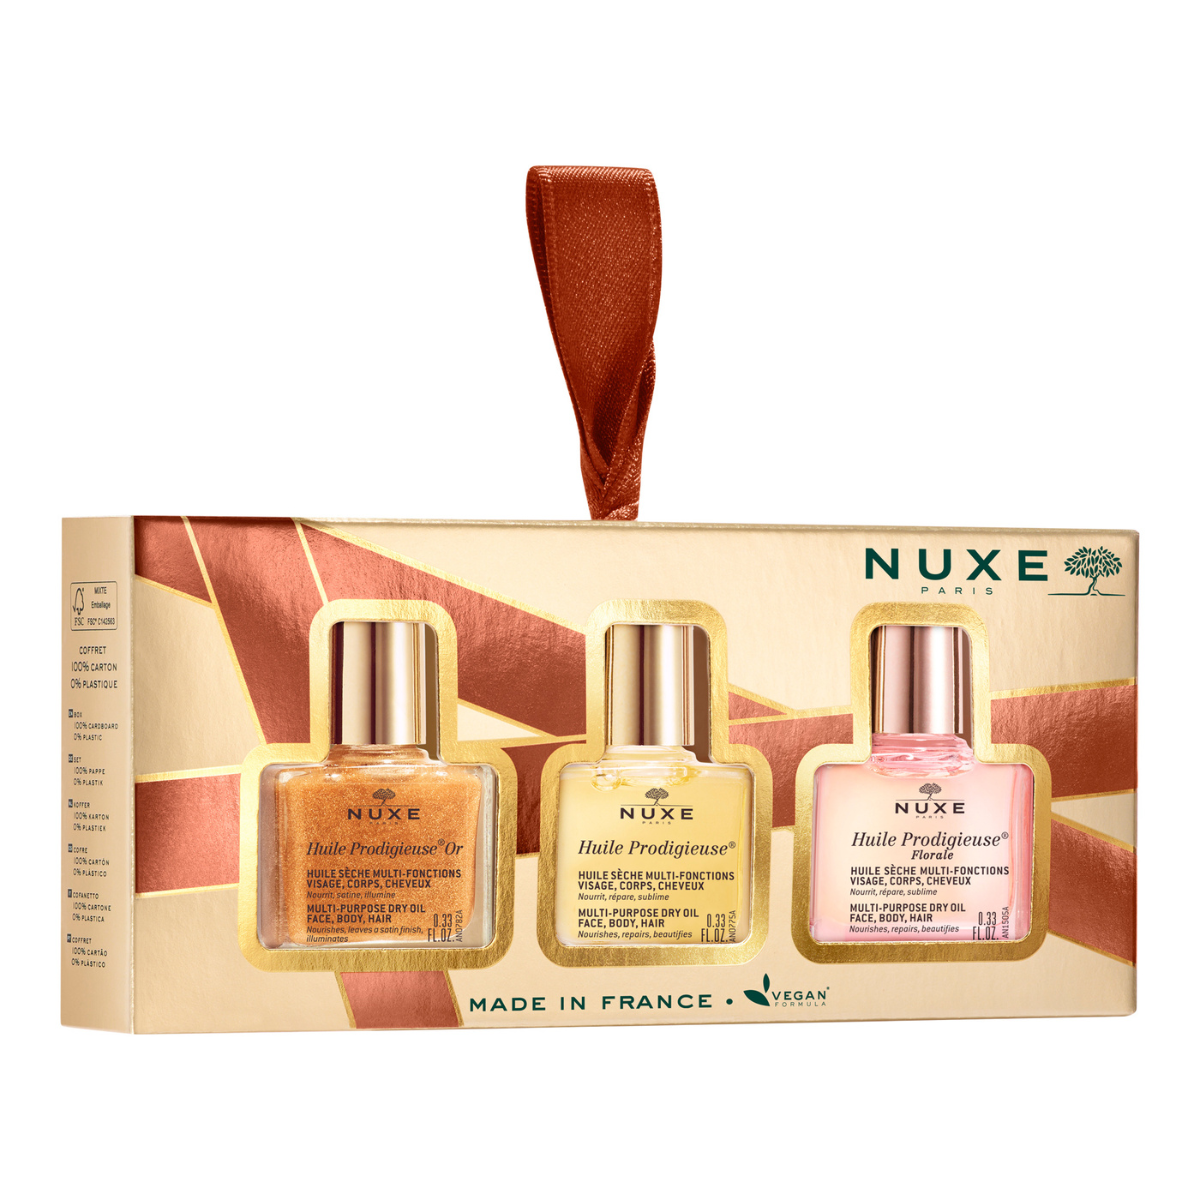 NUXE The 3 Prodigieux® Gift Set